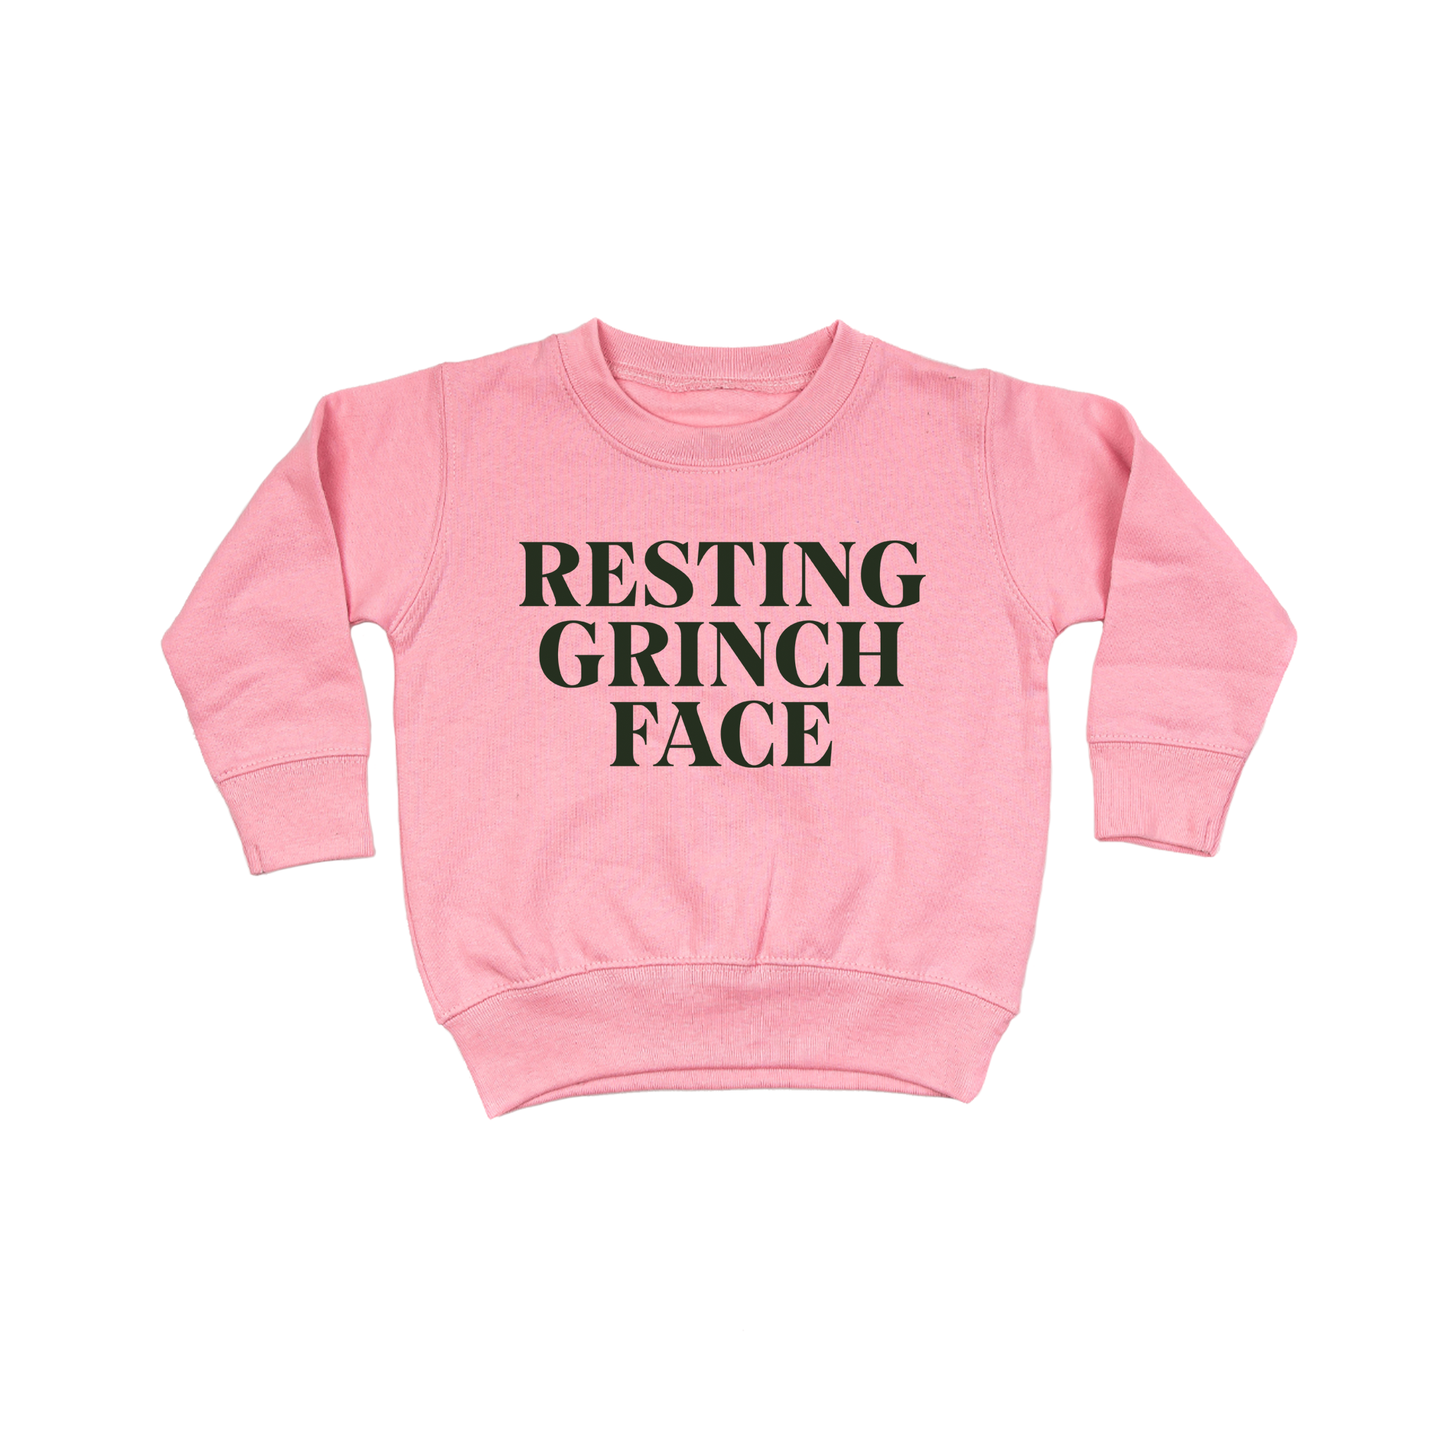 Resting Grinch Face (Spruce) - Kids Sweatshirt (Pink)